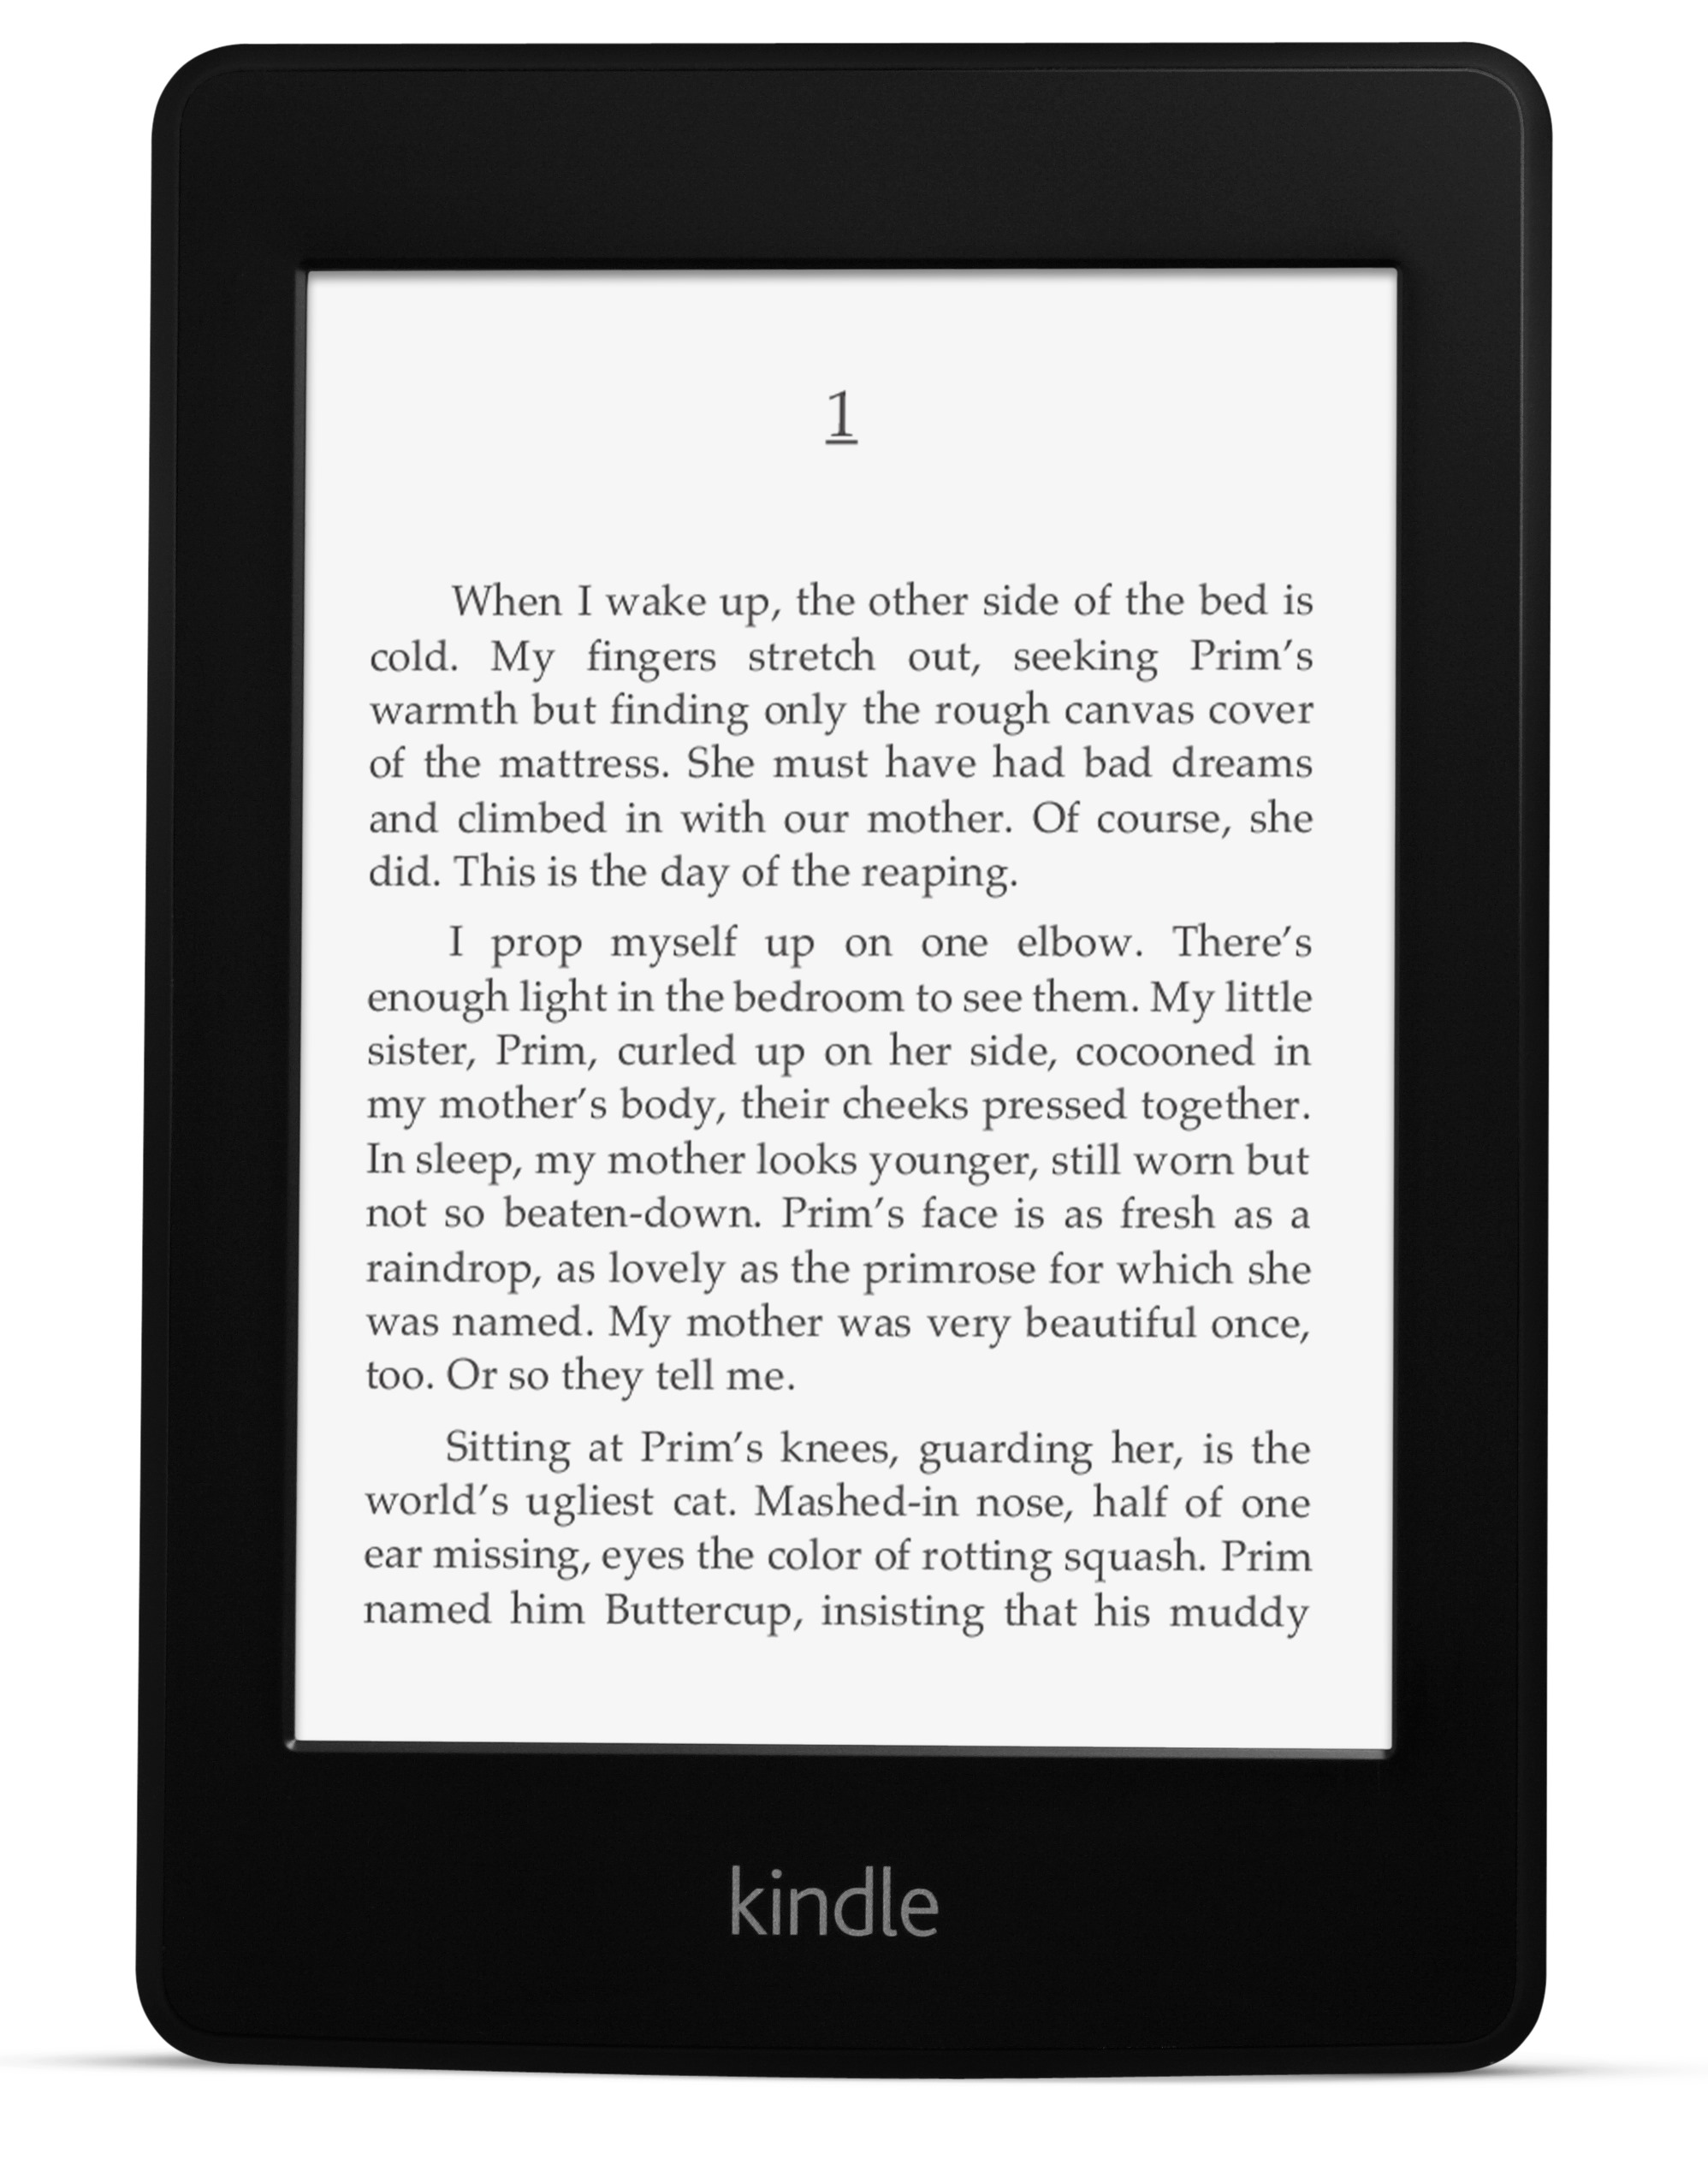 Amazon Kindle Paperwhite 3g Availability